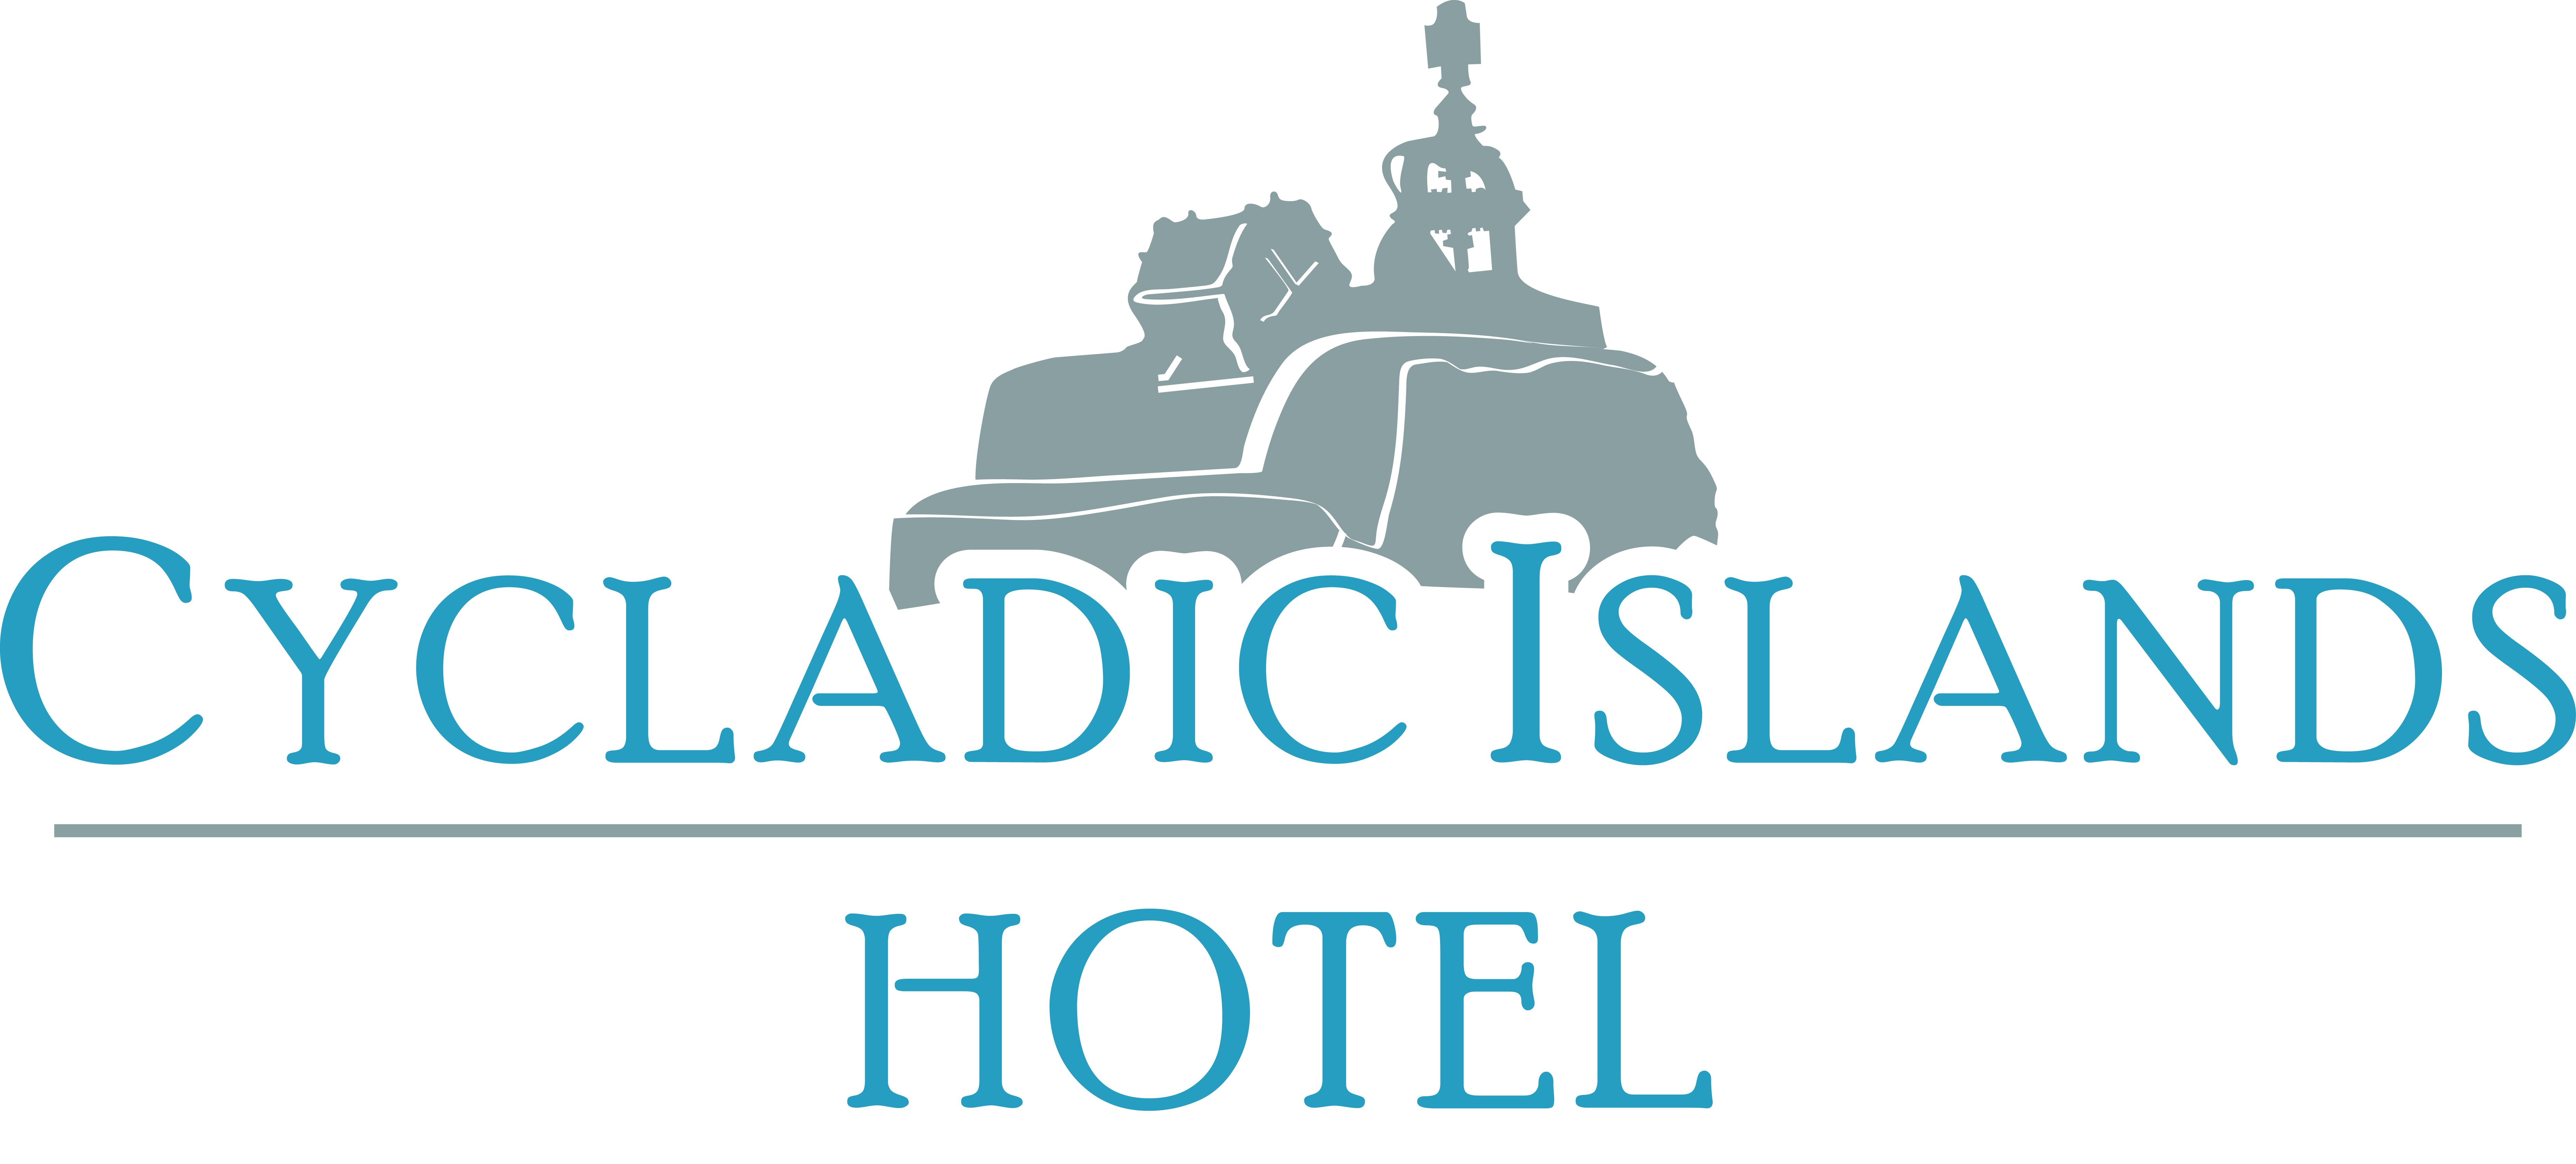 Cycladic Islands Hotel